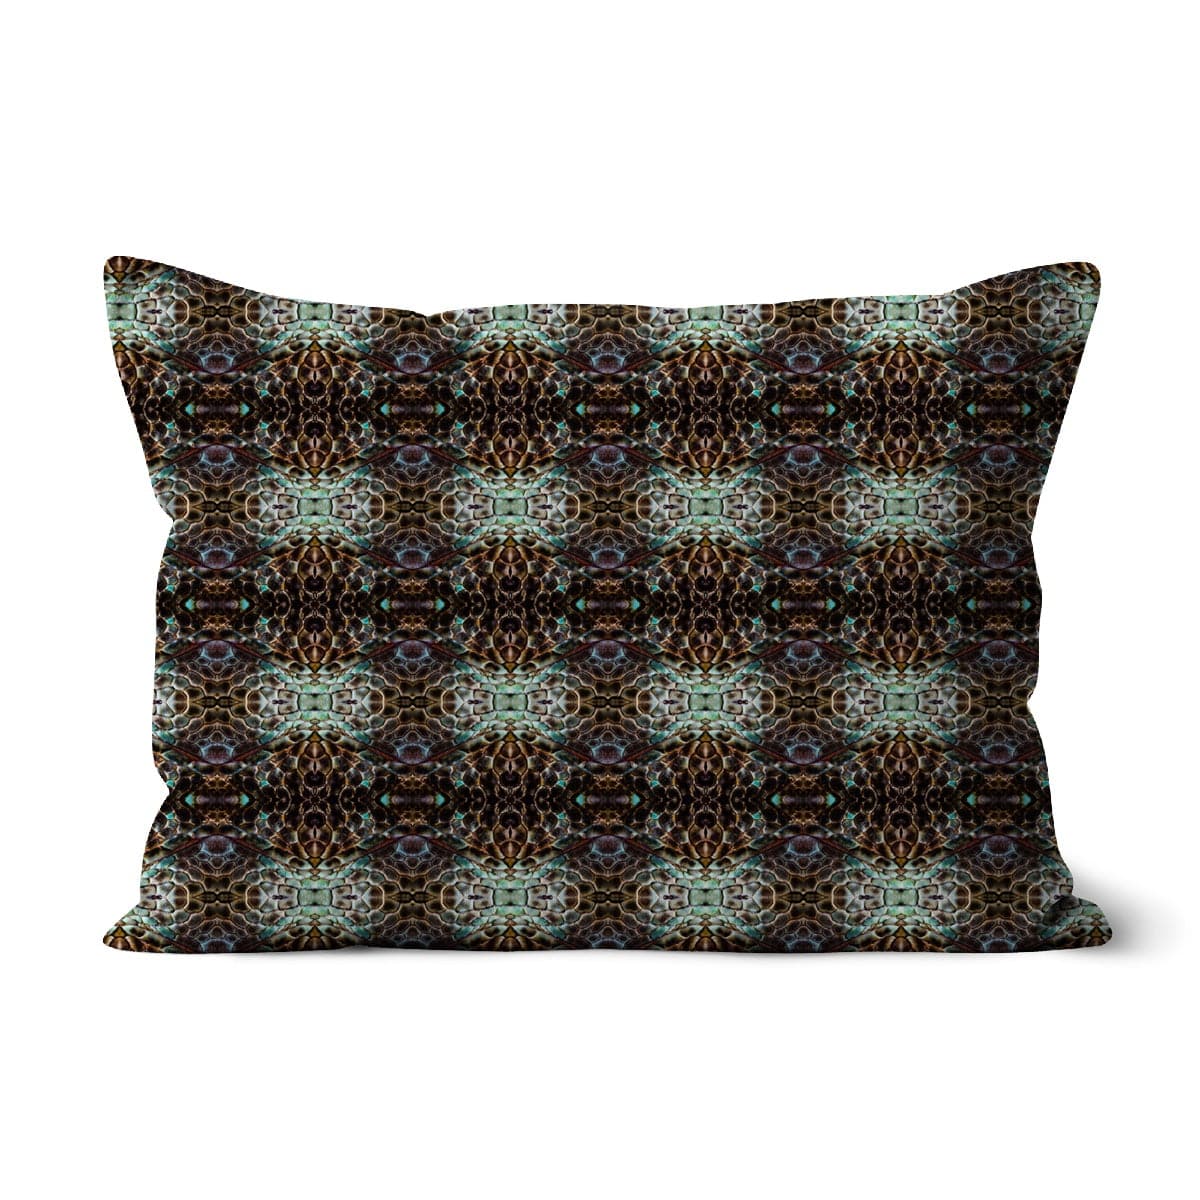 Reptile skin design  Meditation Pillow/Cushion, by Sensus Studio Design